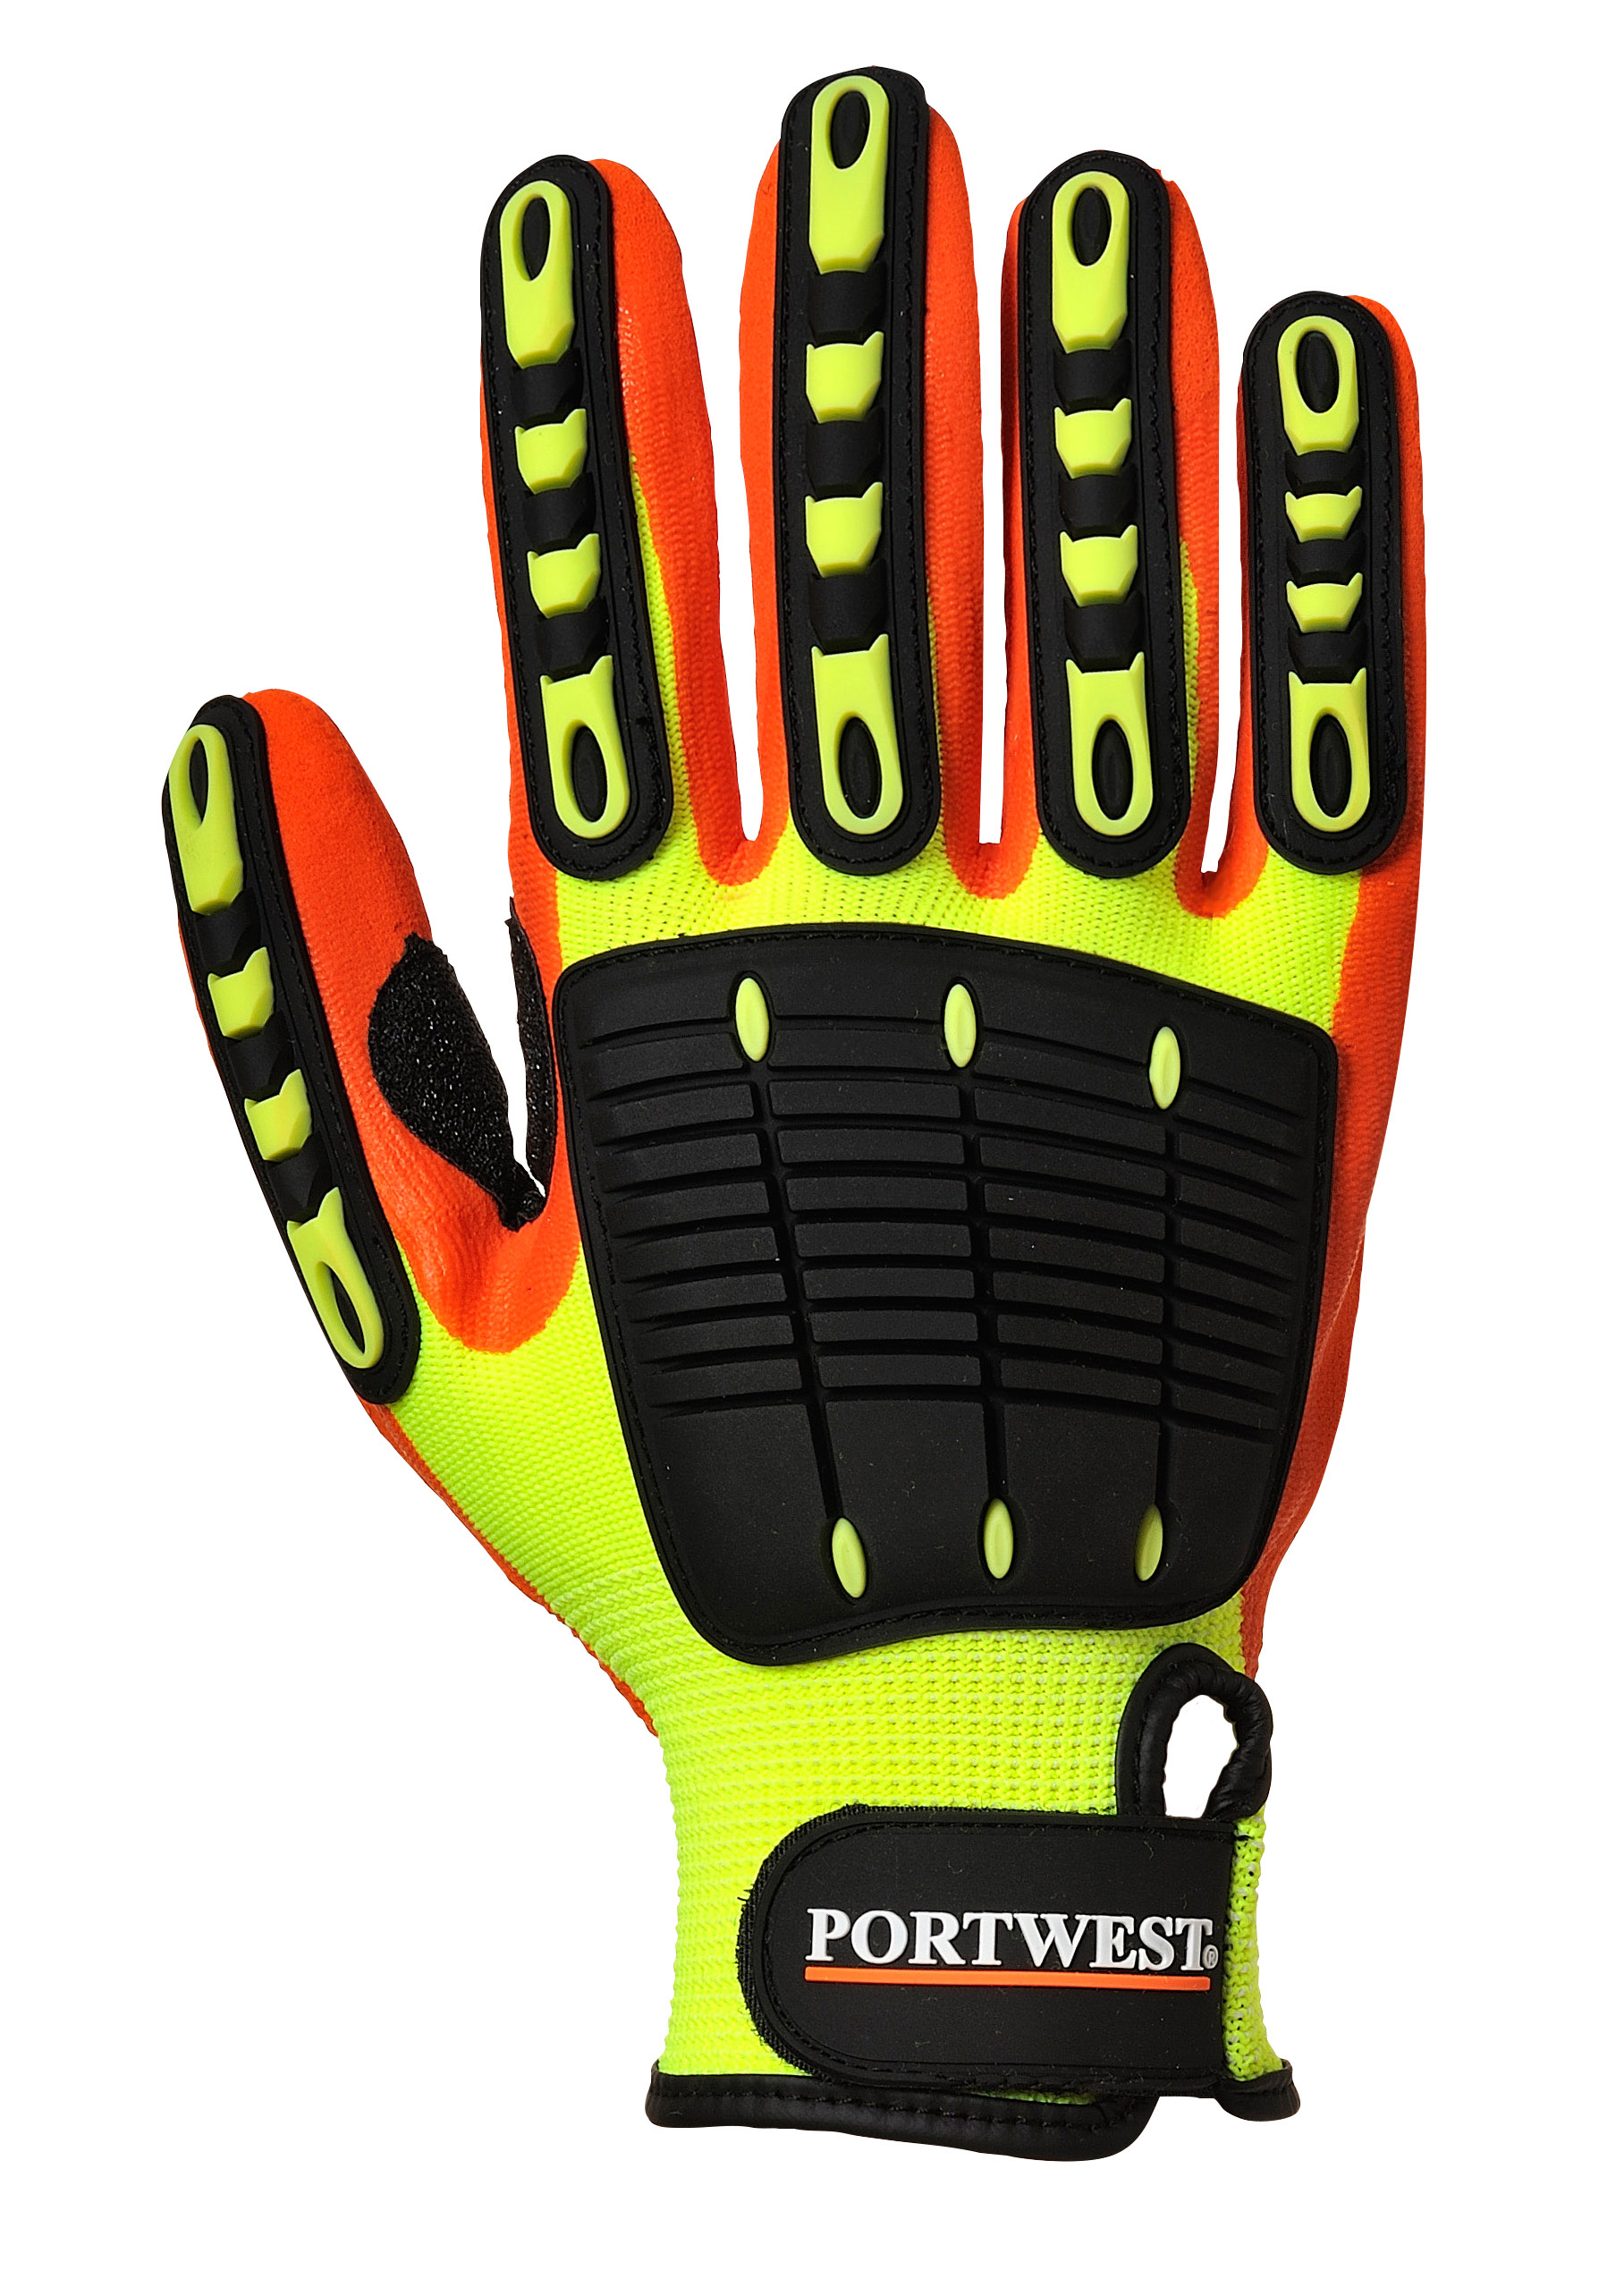 High Performance Glove One Pair Pack Portwest Powertool Pro